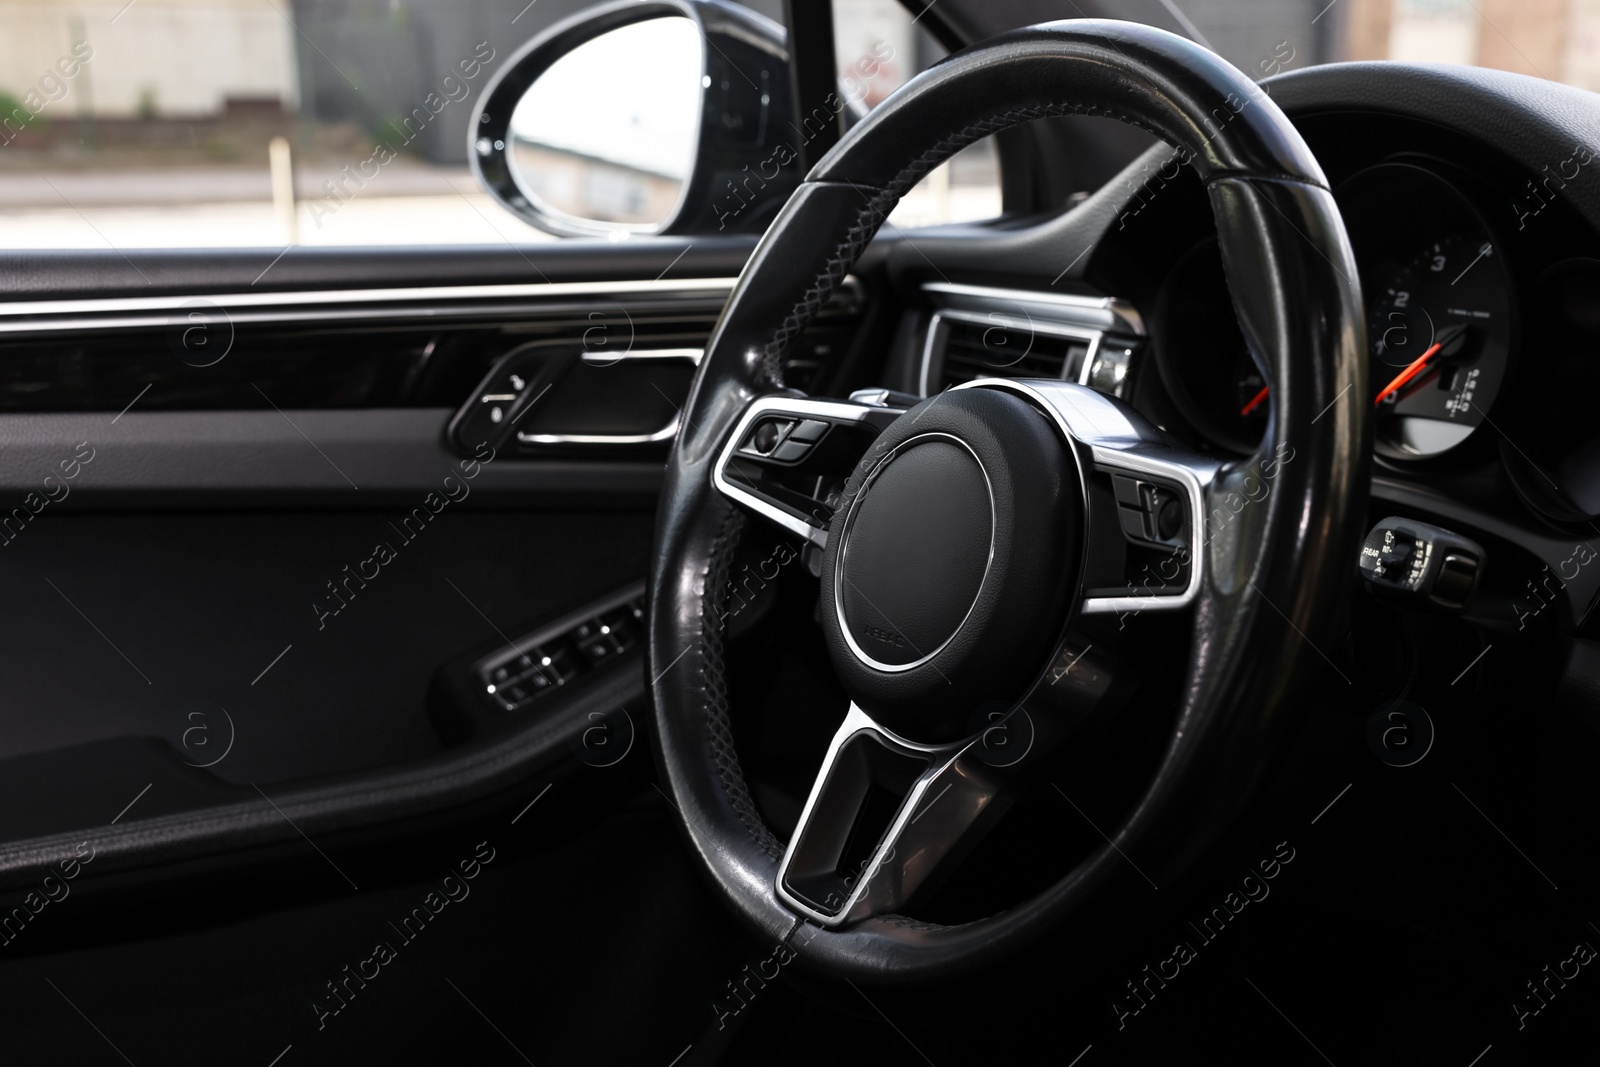 Photo of Steering wheel inside modern black car, closeup view